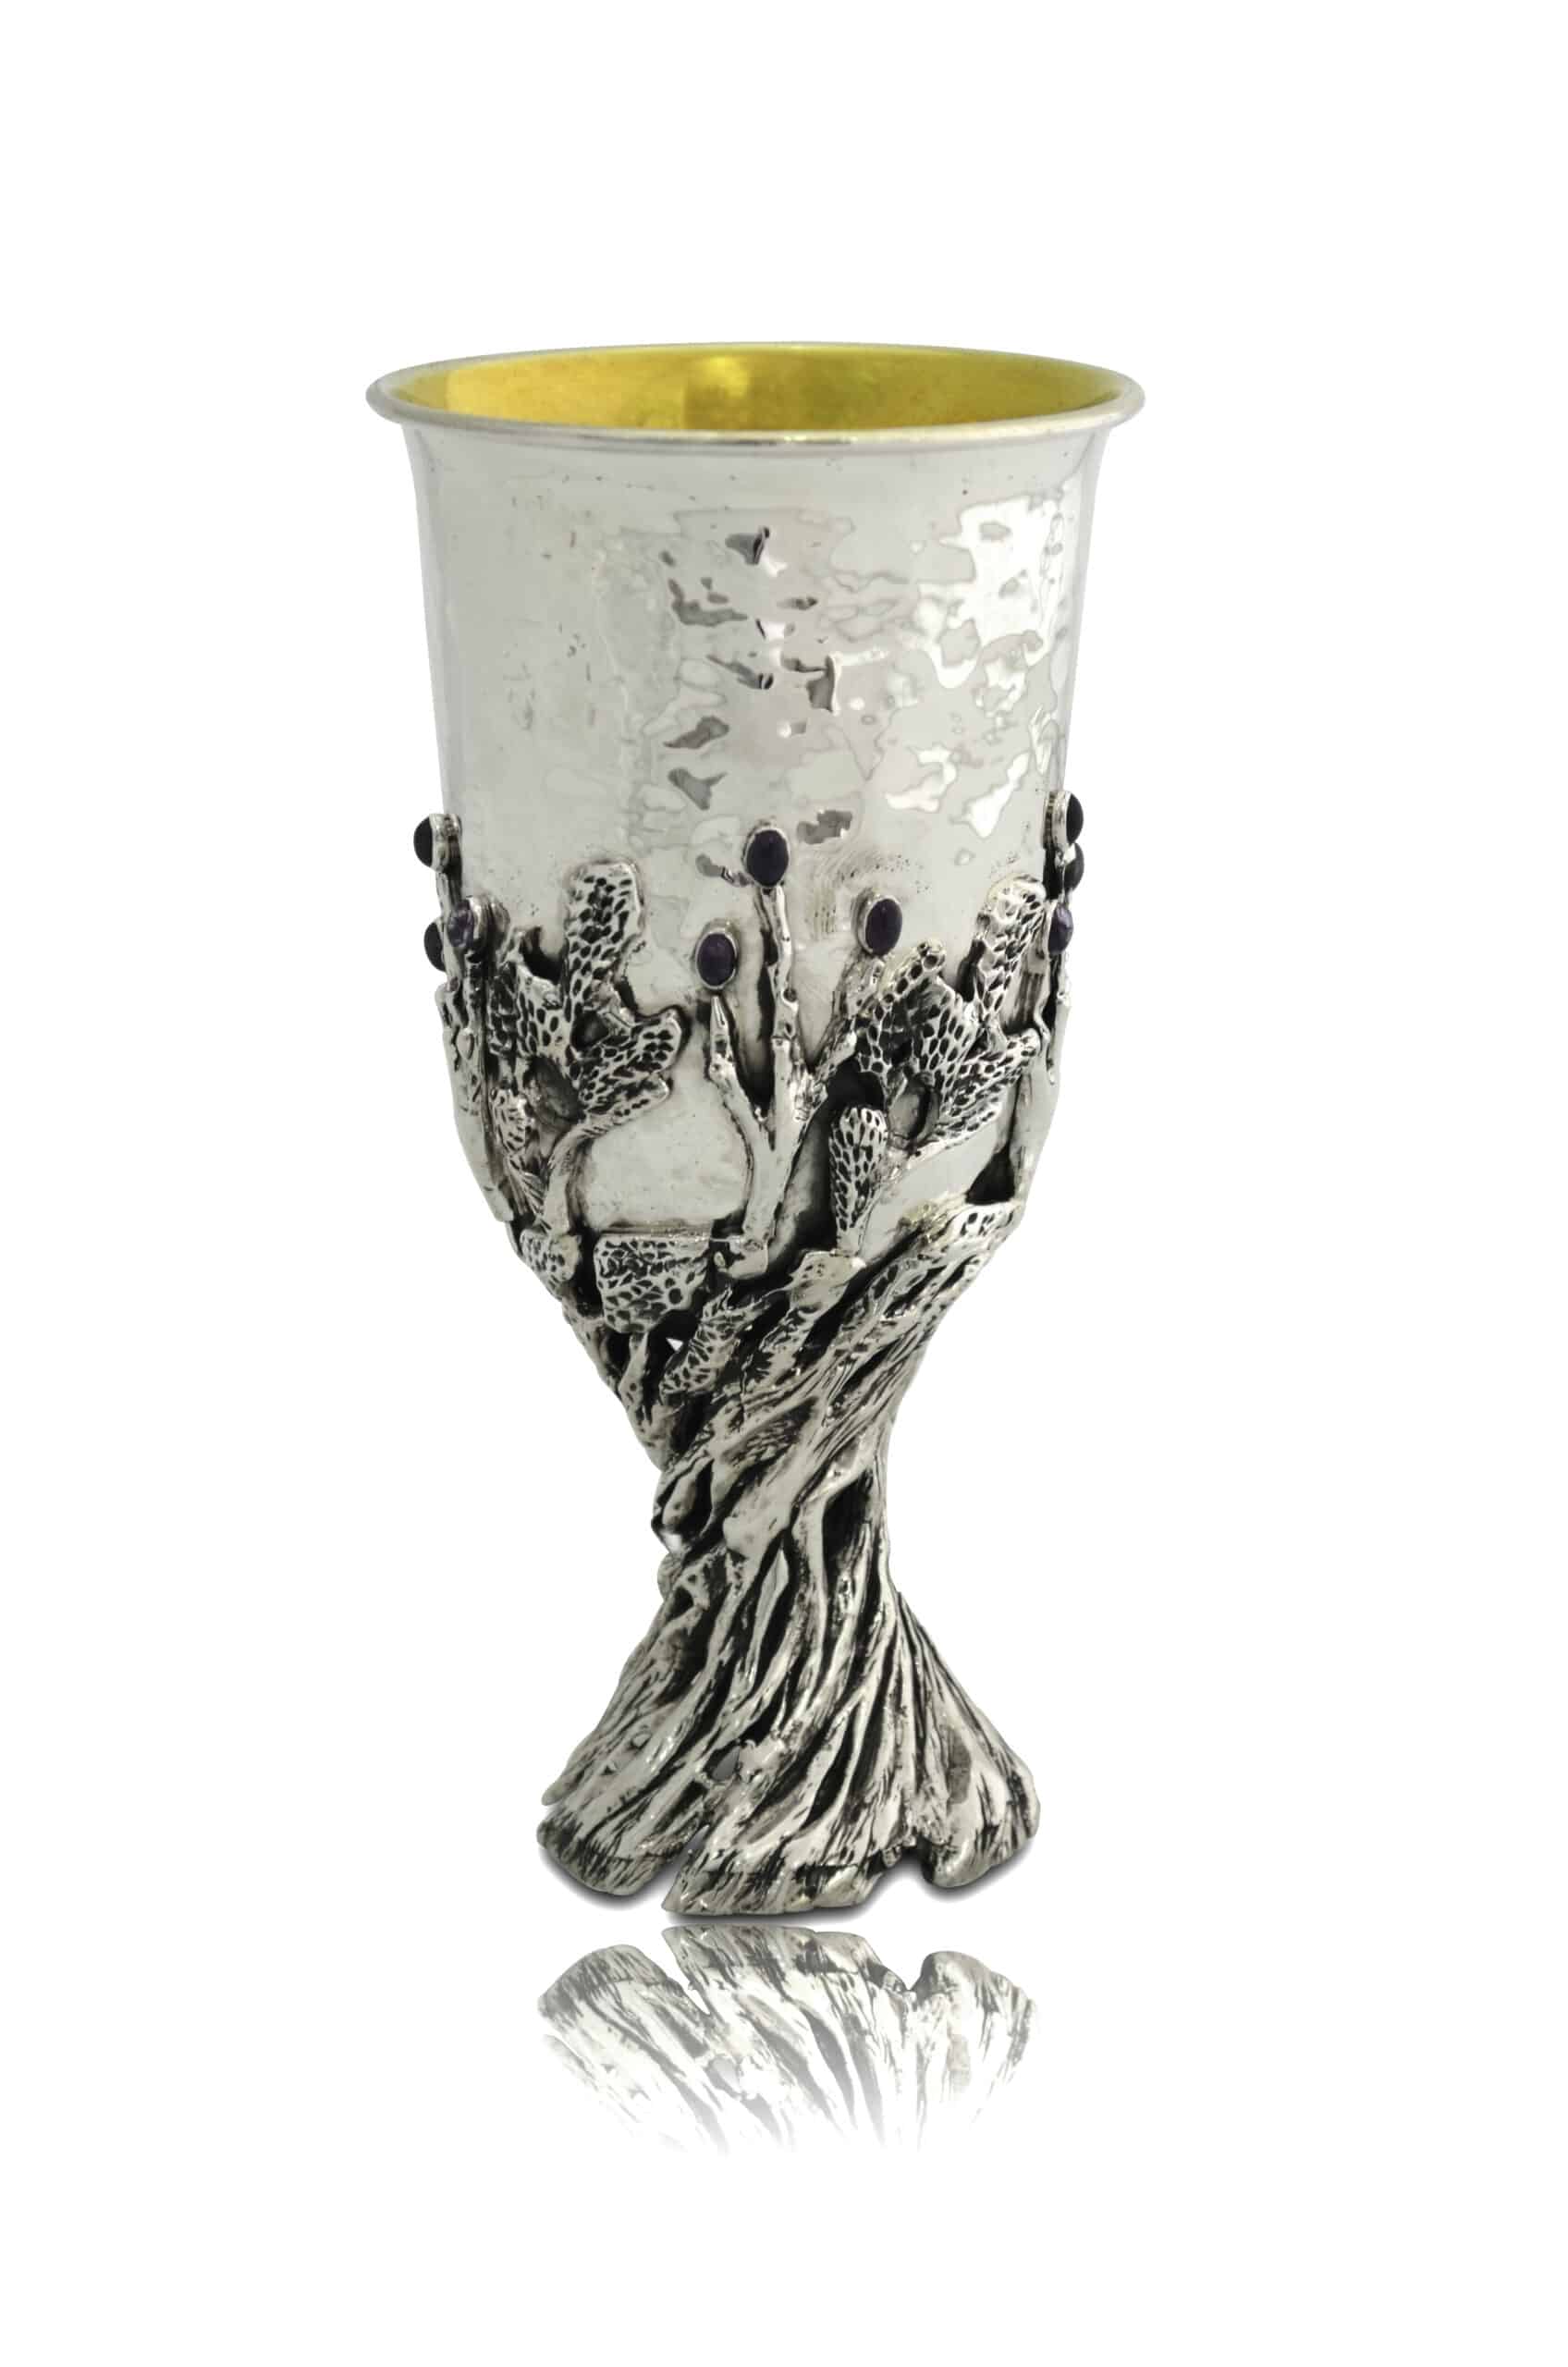 Floral Silver Elijah Cup with Amethyst Stones